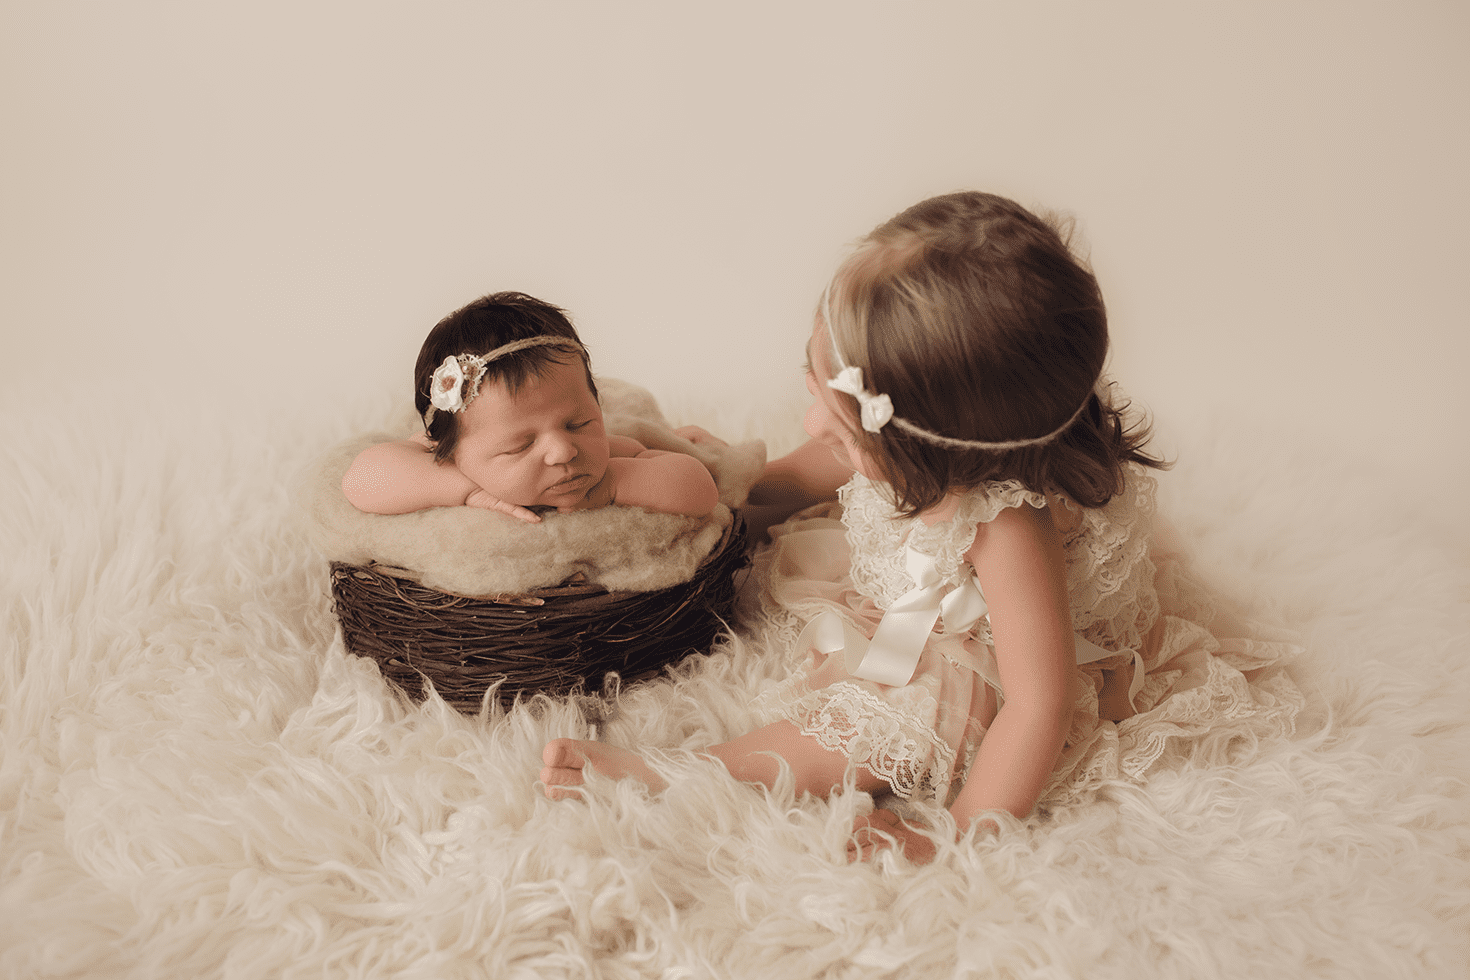 Arlington Heights Newborn Photographer | Agata Brannon Photography